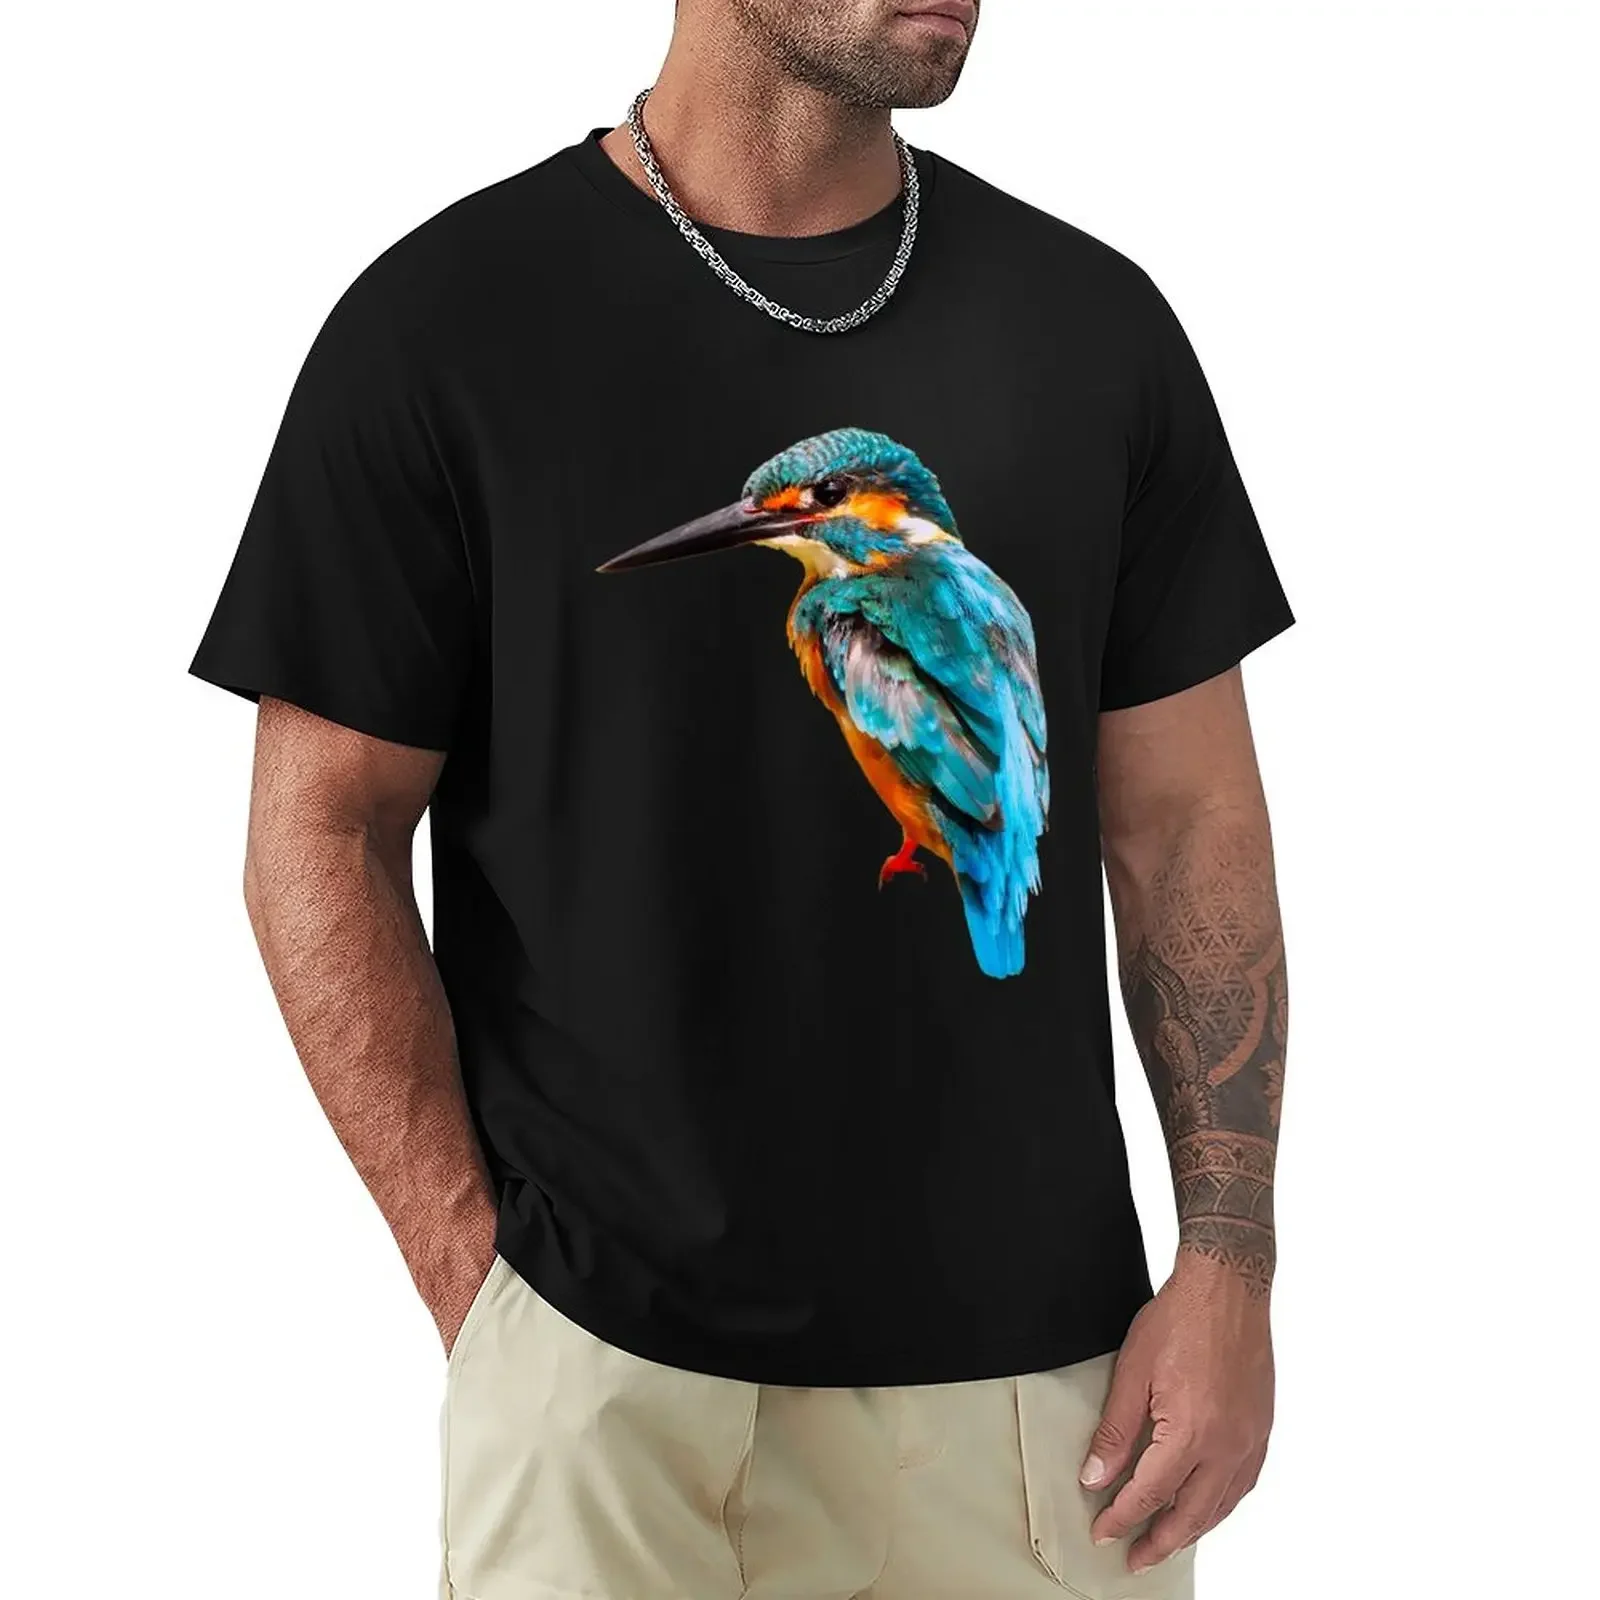 Kingfisher T-Shirt cute tops boys whites animal prinfor boys mens t shirts casual stylish